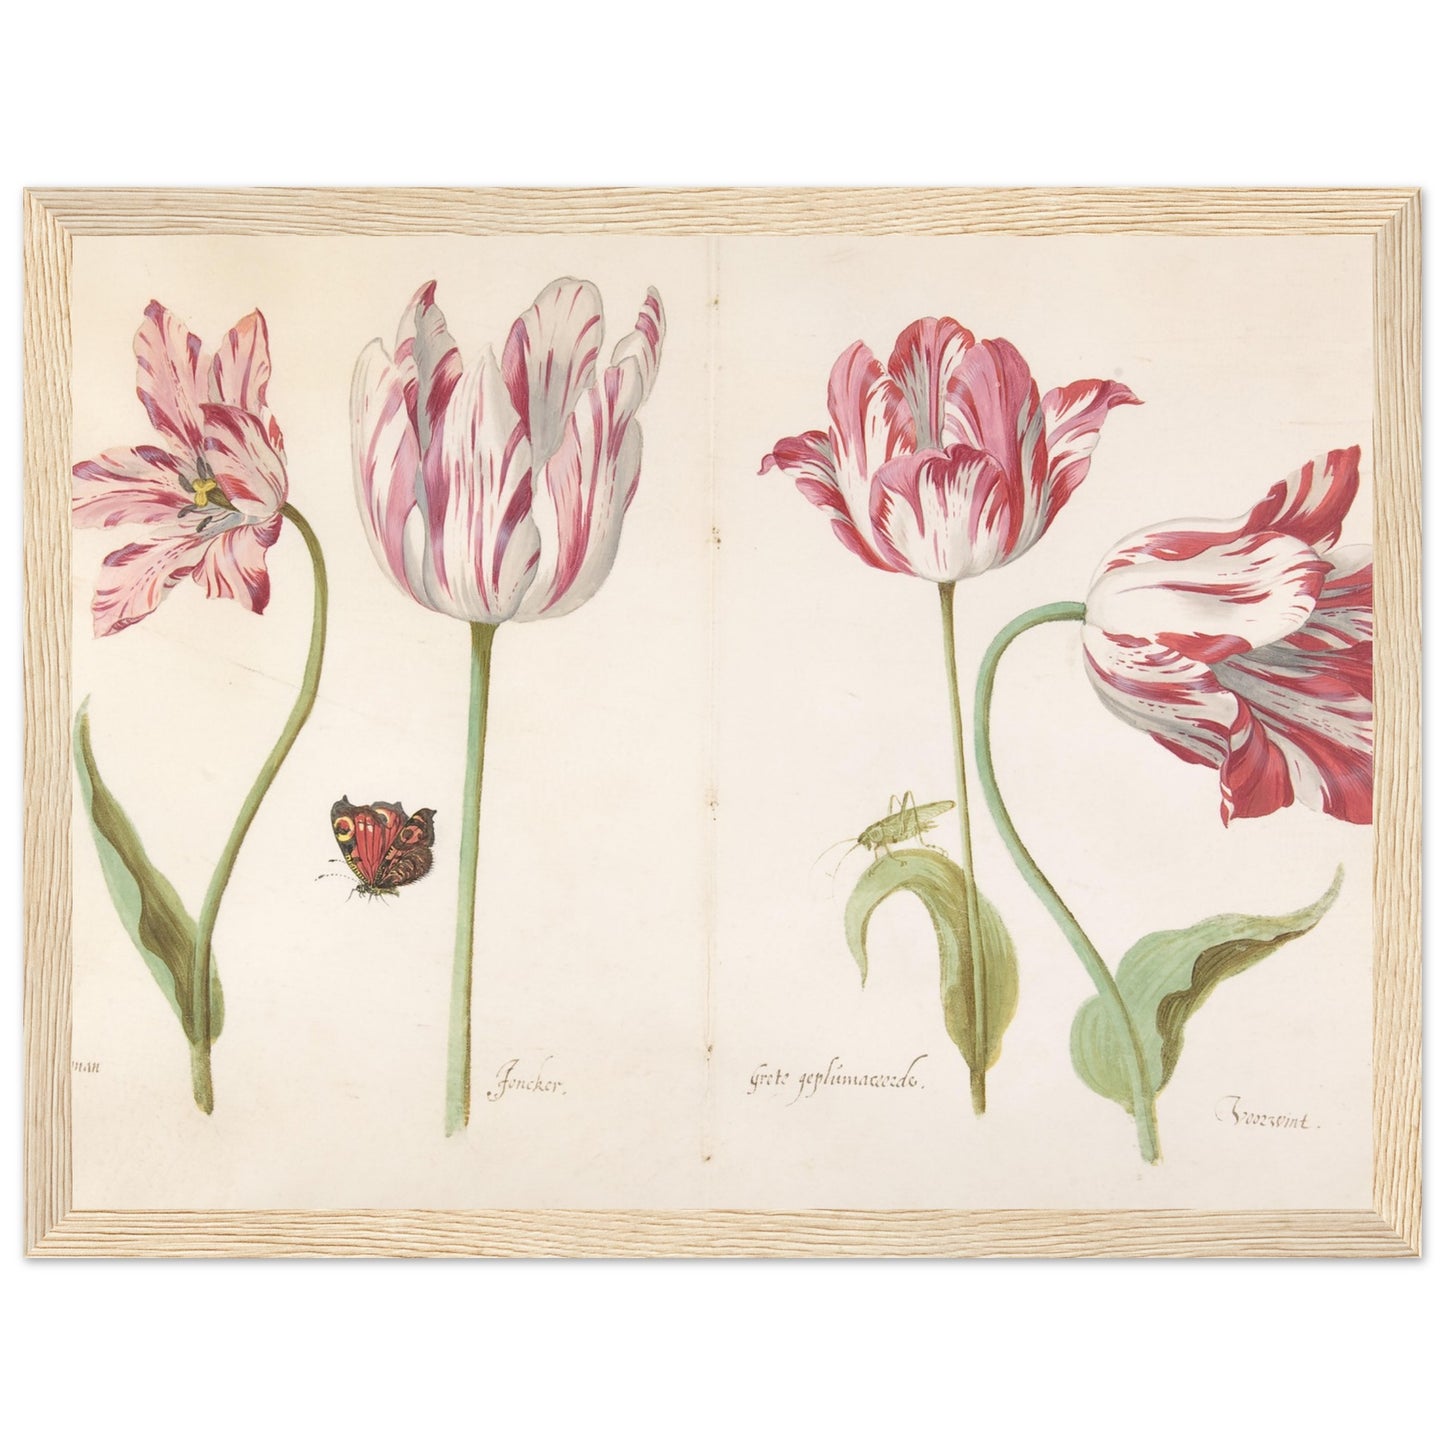 Four Tulips artwork print wood frame | By Print Room Ltd